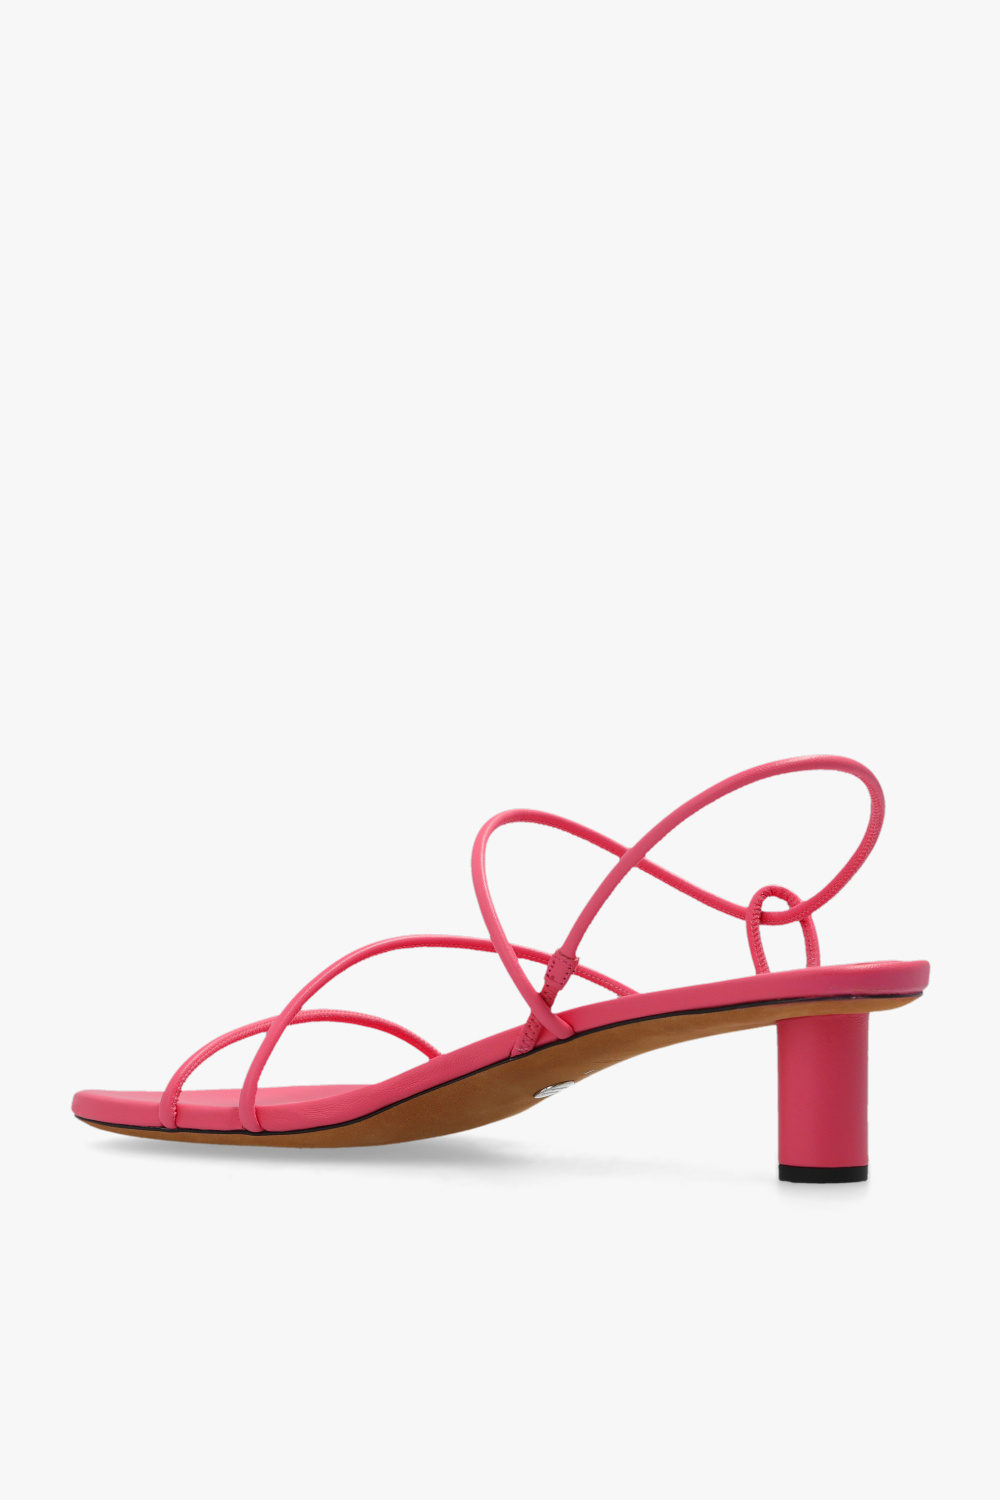 proenza Cocktail Schouler ‘Sculpt’ heeled sandals